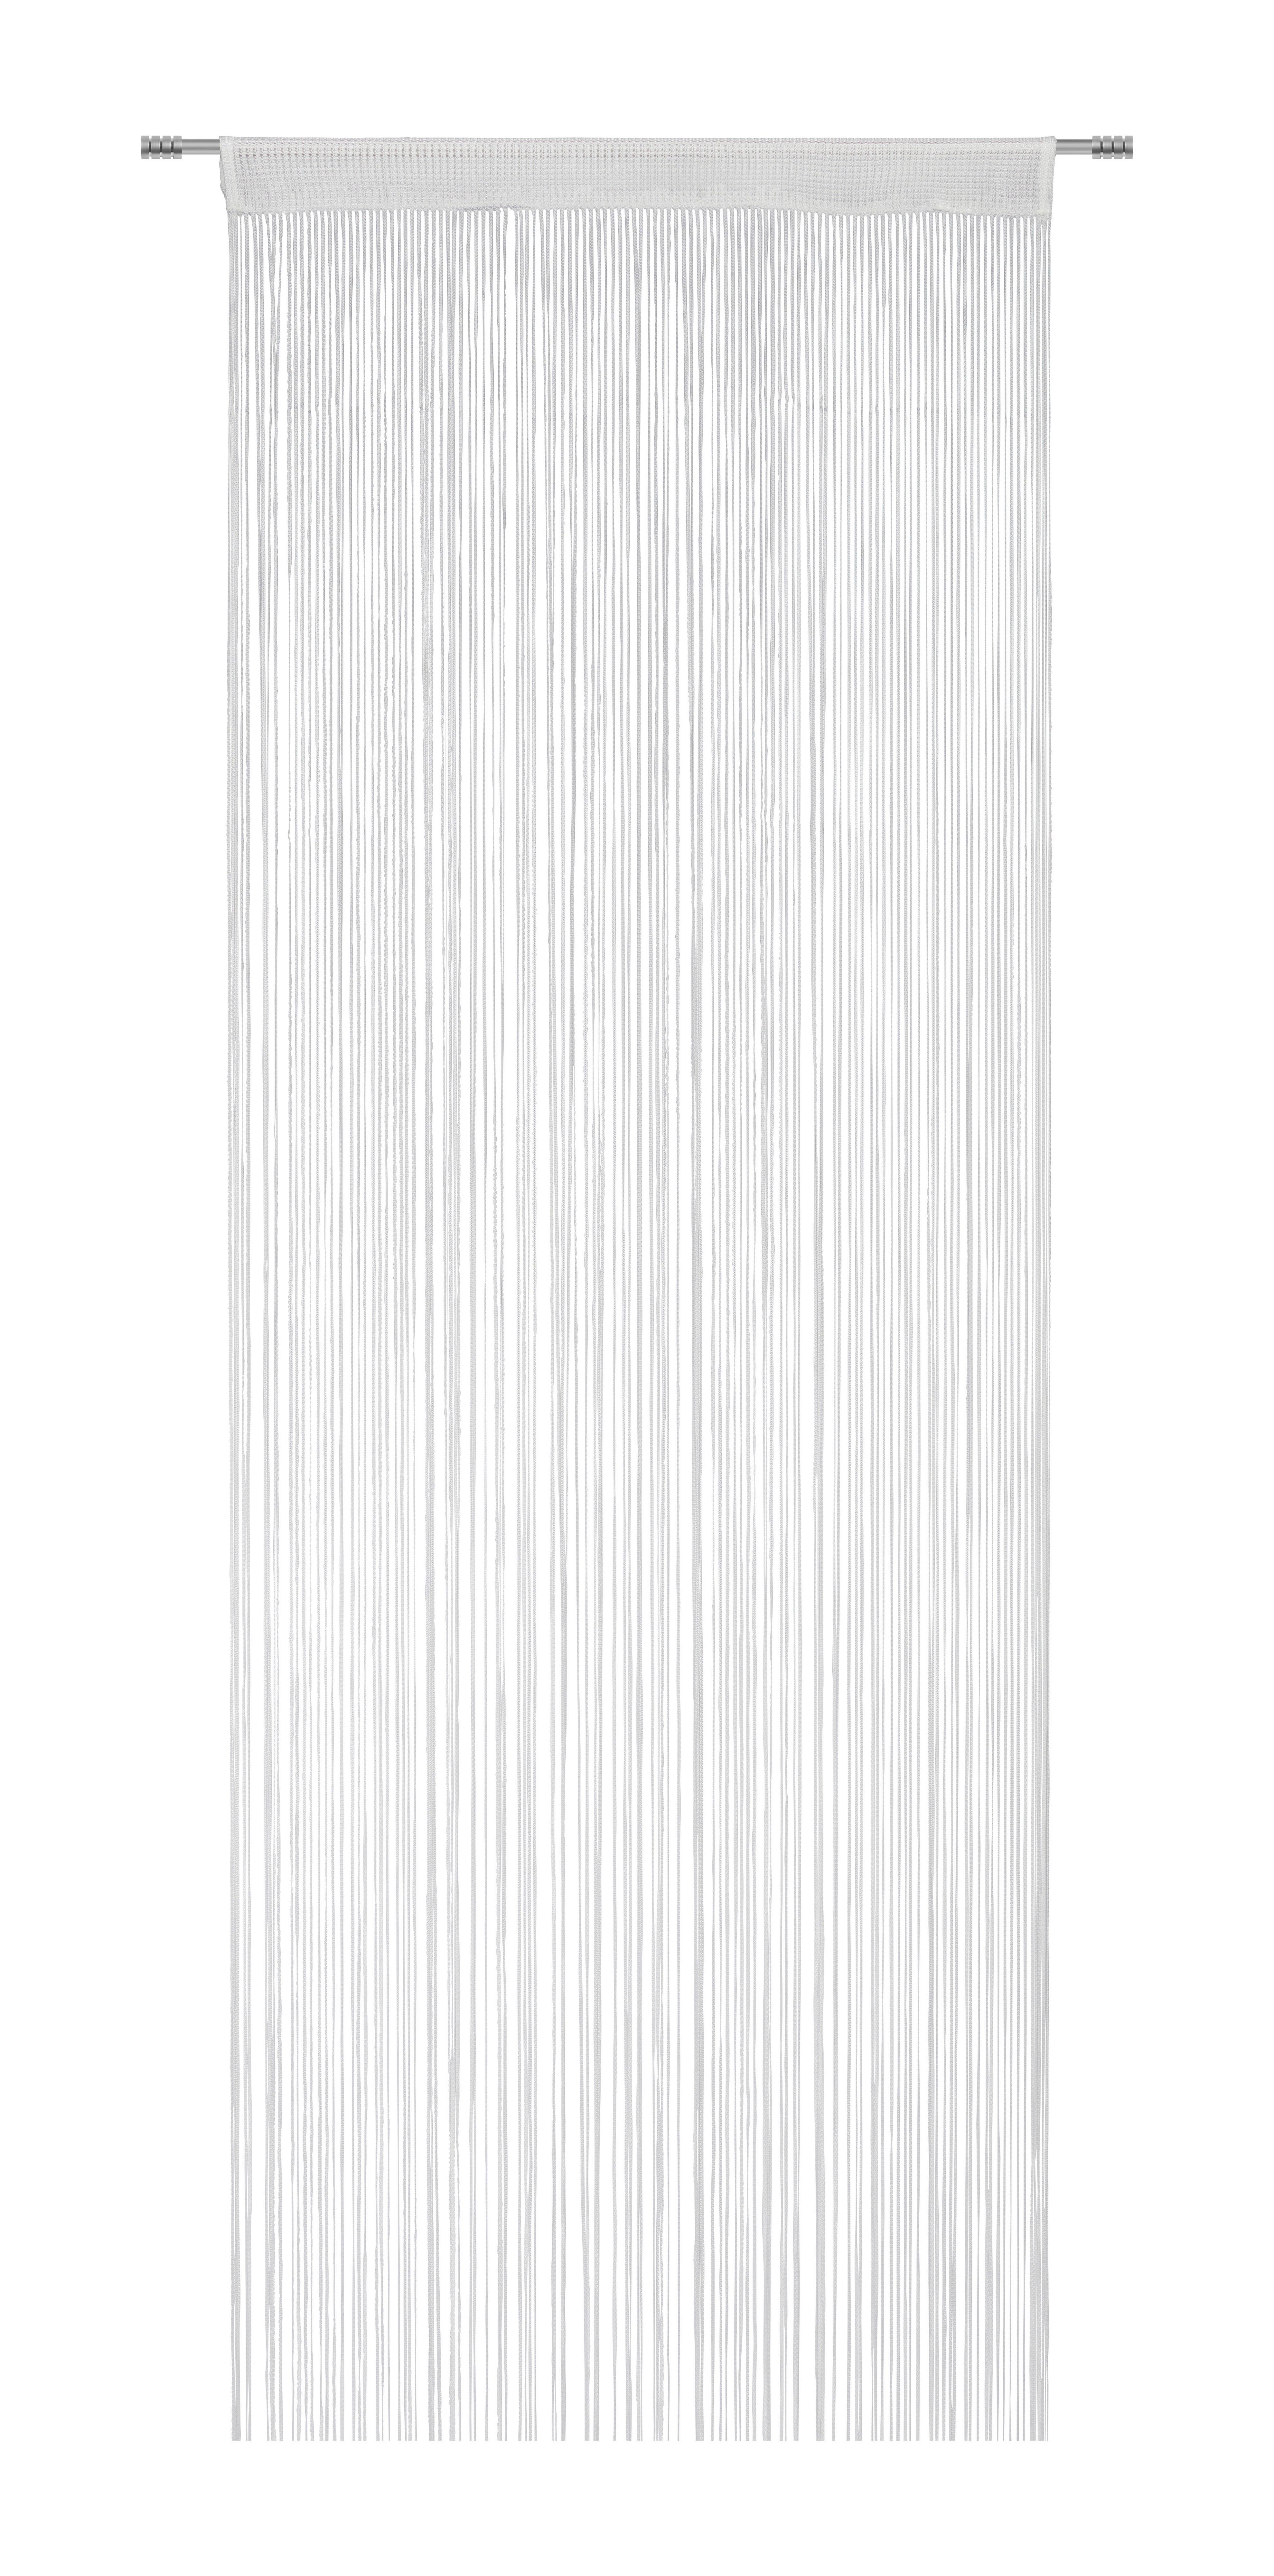 Nitkový Záves String Uni, 90/250cm, Biela - biela, textil (90/250cm) - Premium Living